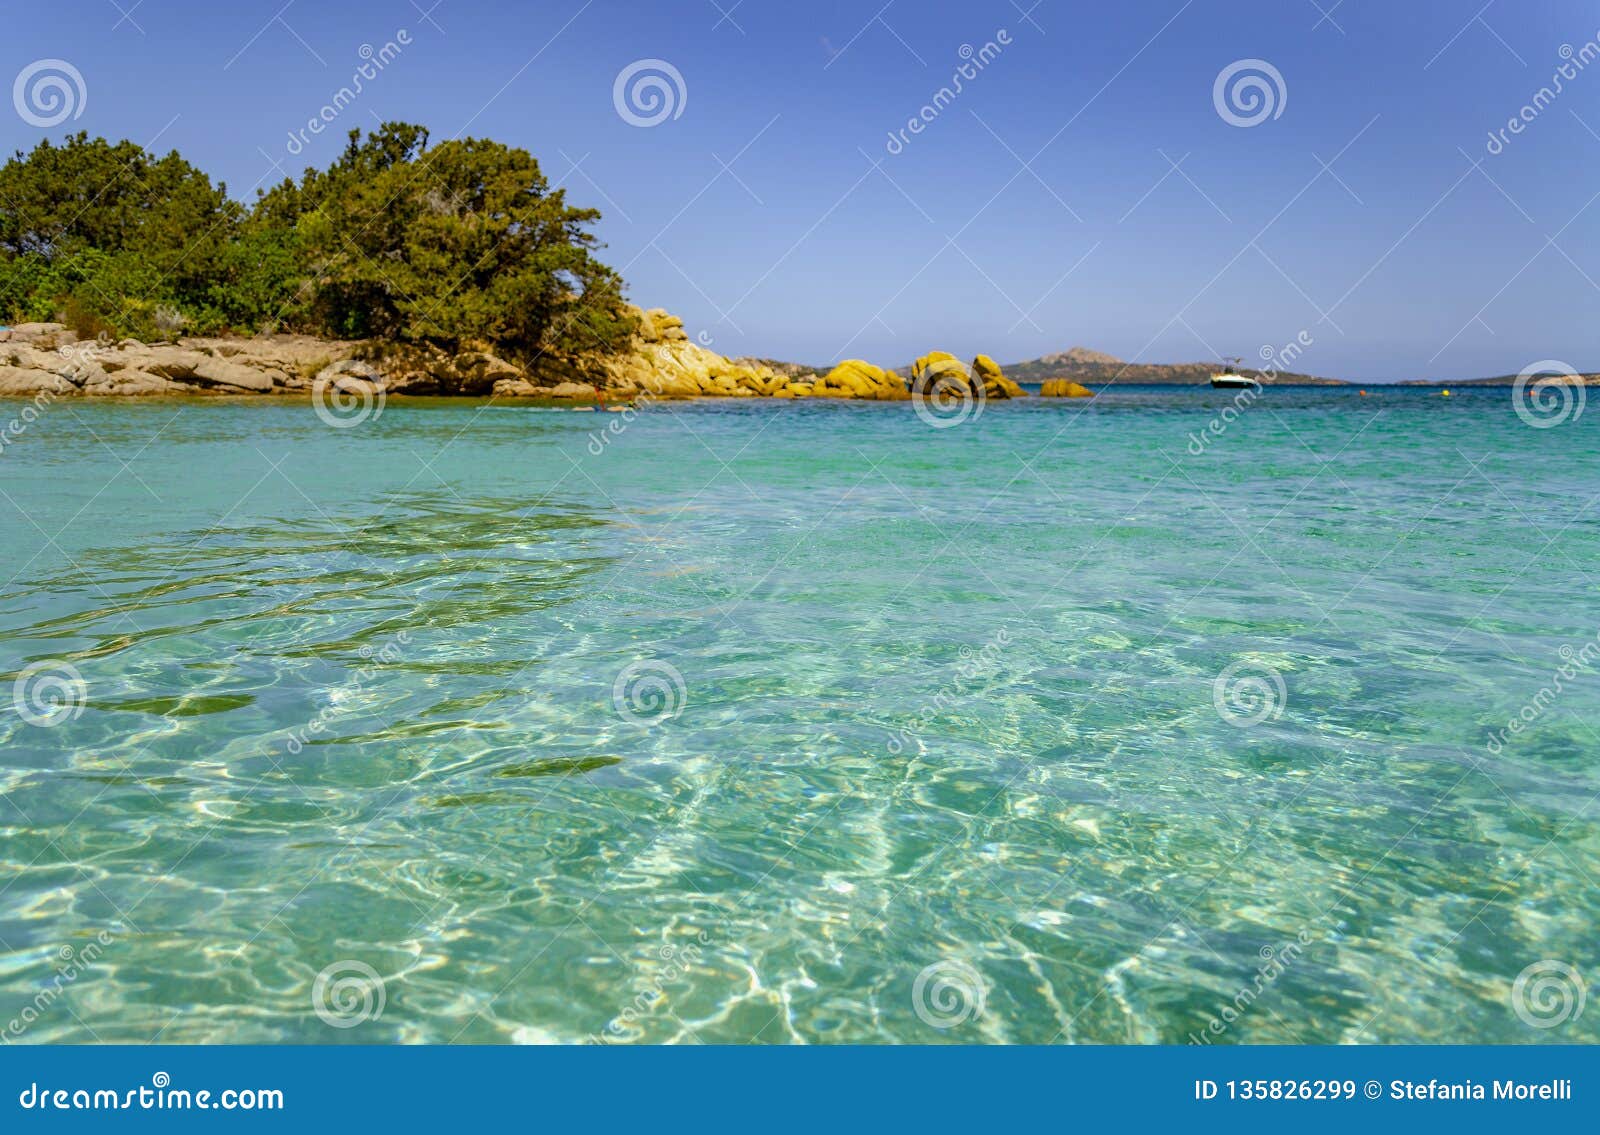 sea of the costa smeralda olbia-tempio, sardinia, italy